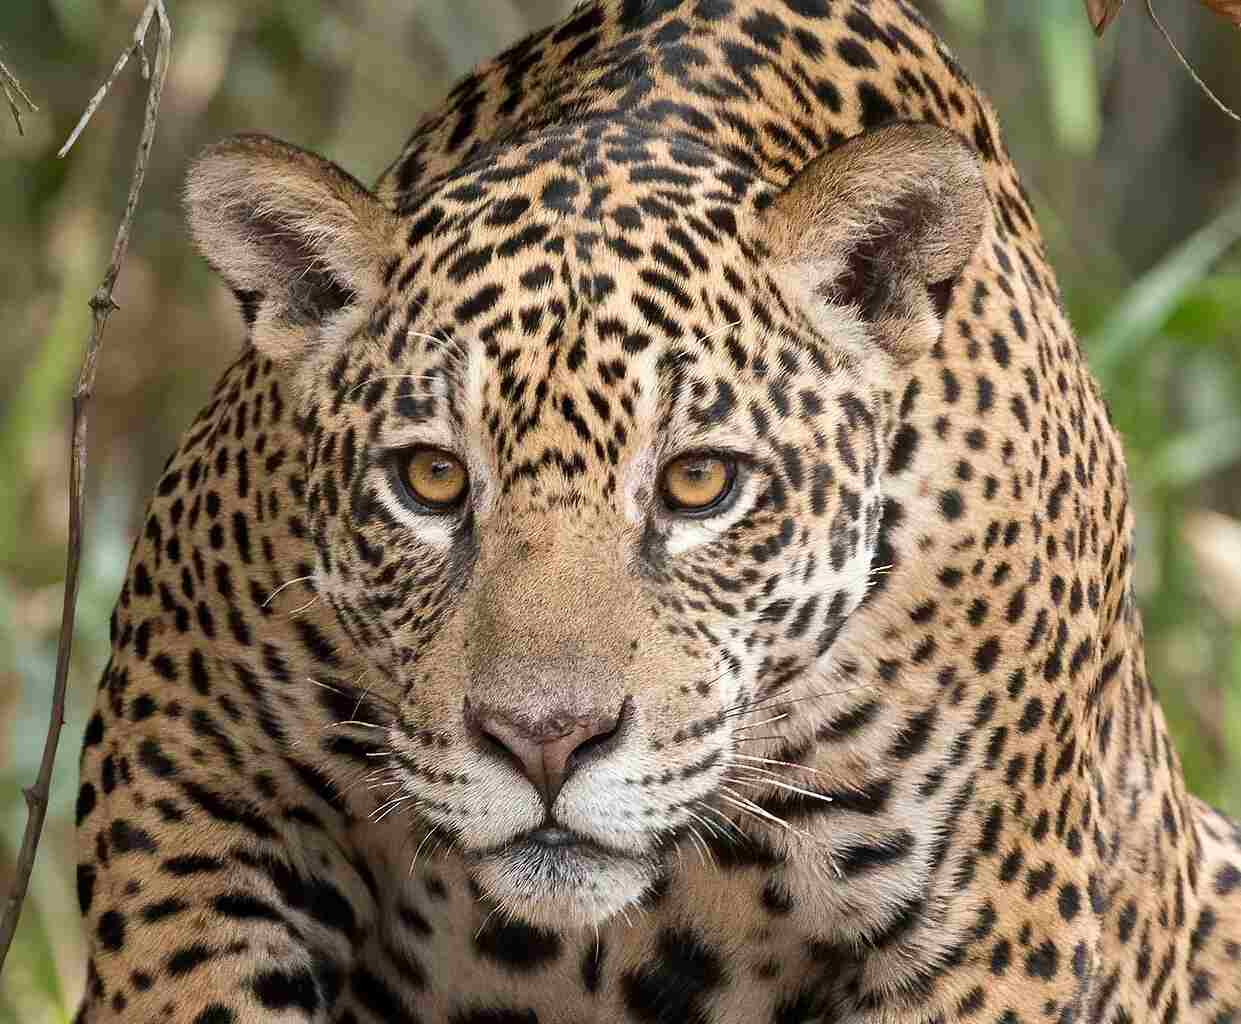 Jaguar Vs Tiger: The Taxonomy of Jaguars Differentiates Them from Tigers (Credit: Charles J. Sharp 2015 .CC BY-SA 4.0.)